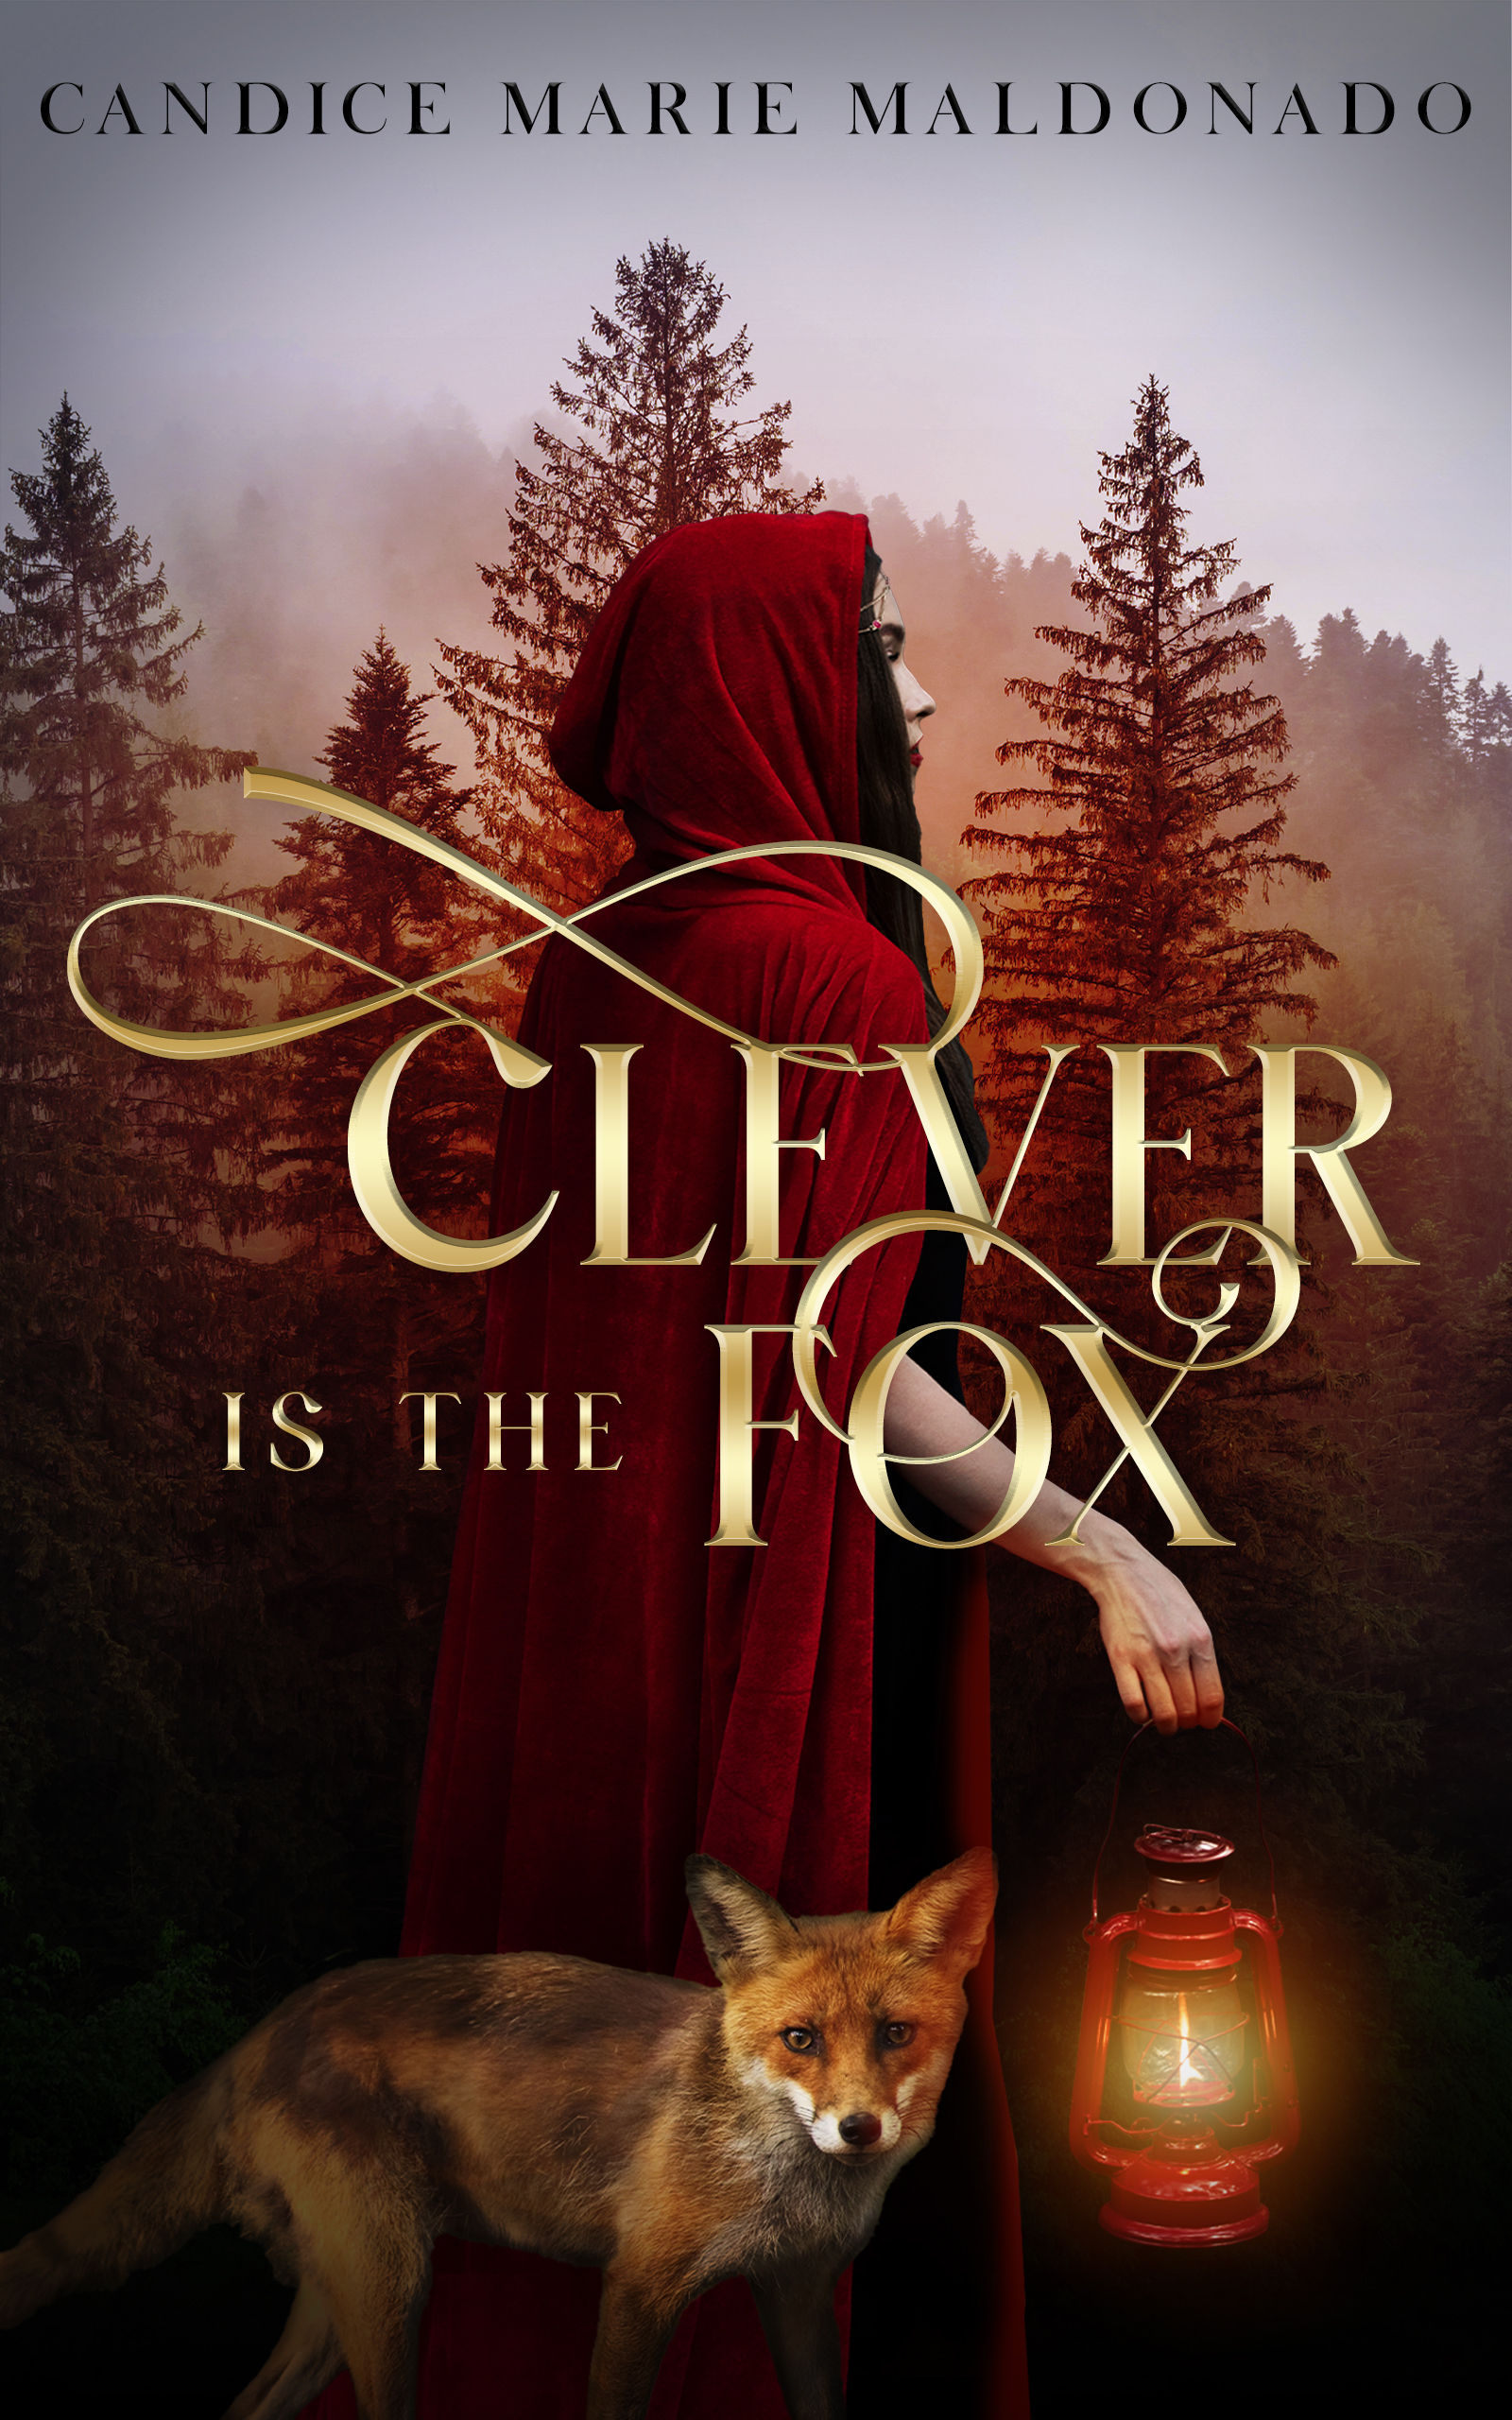 Fox and lantern cloak girl book cover.